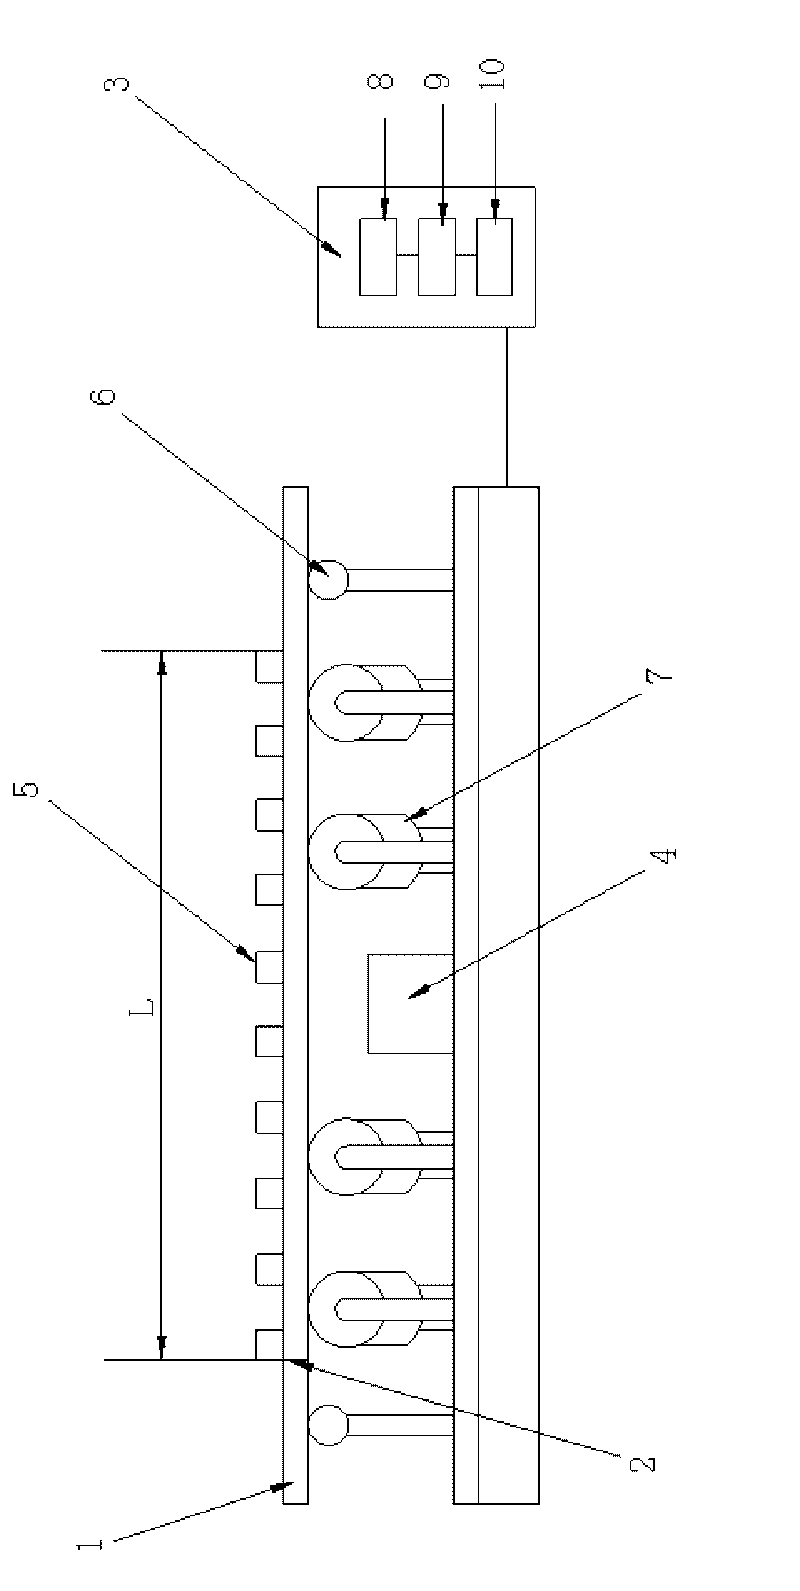 Static demarcating method of belt scale